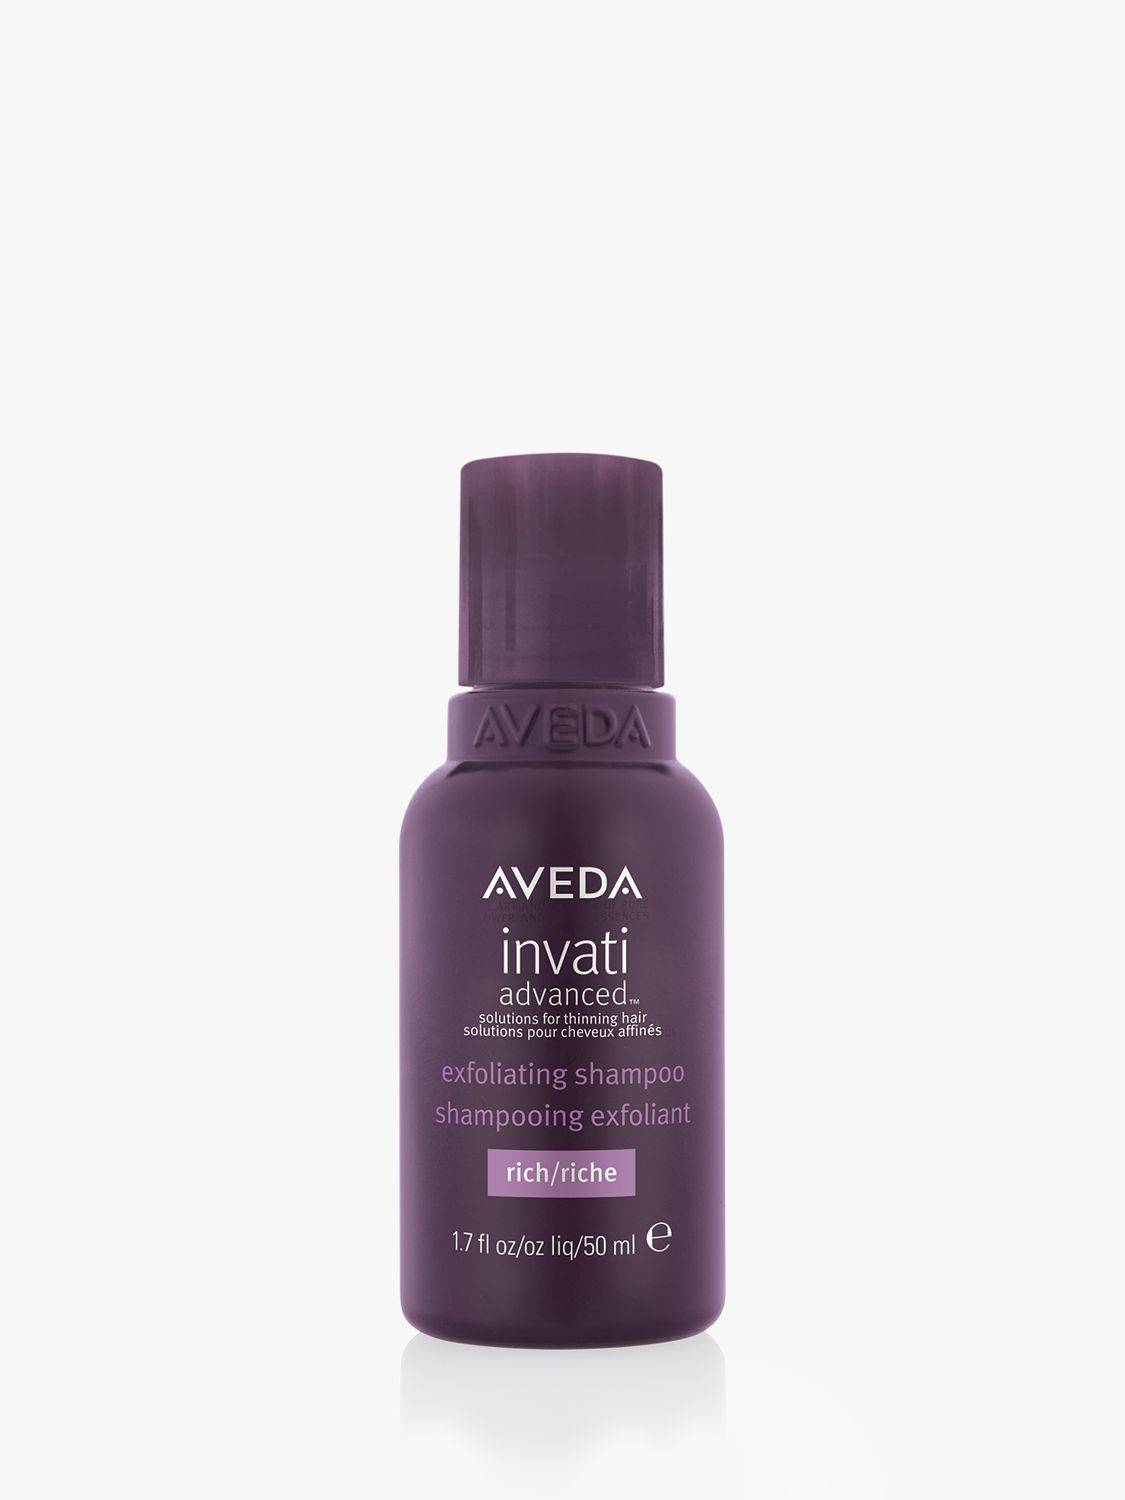 Aveda Invati Advanced™ Exfoliating Shampoo, Rich, 50ml 1